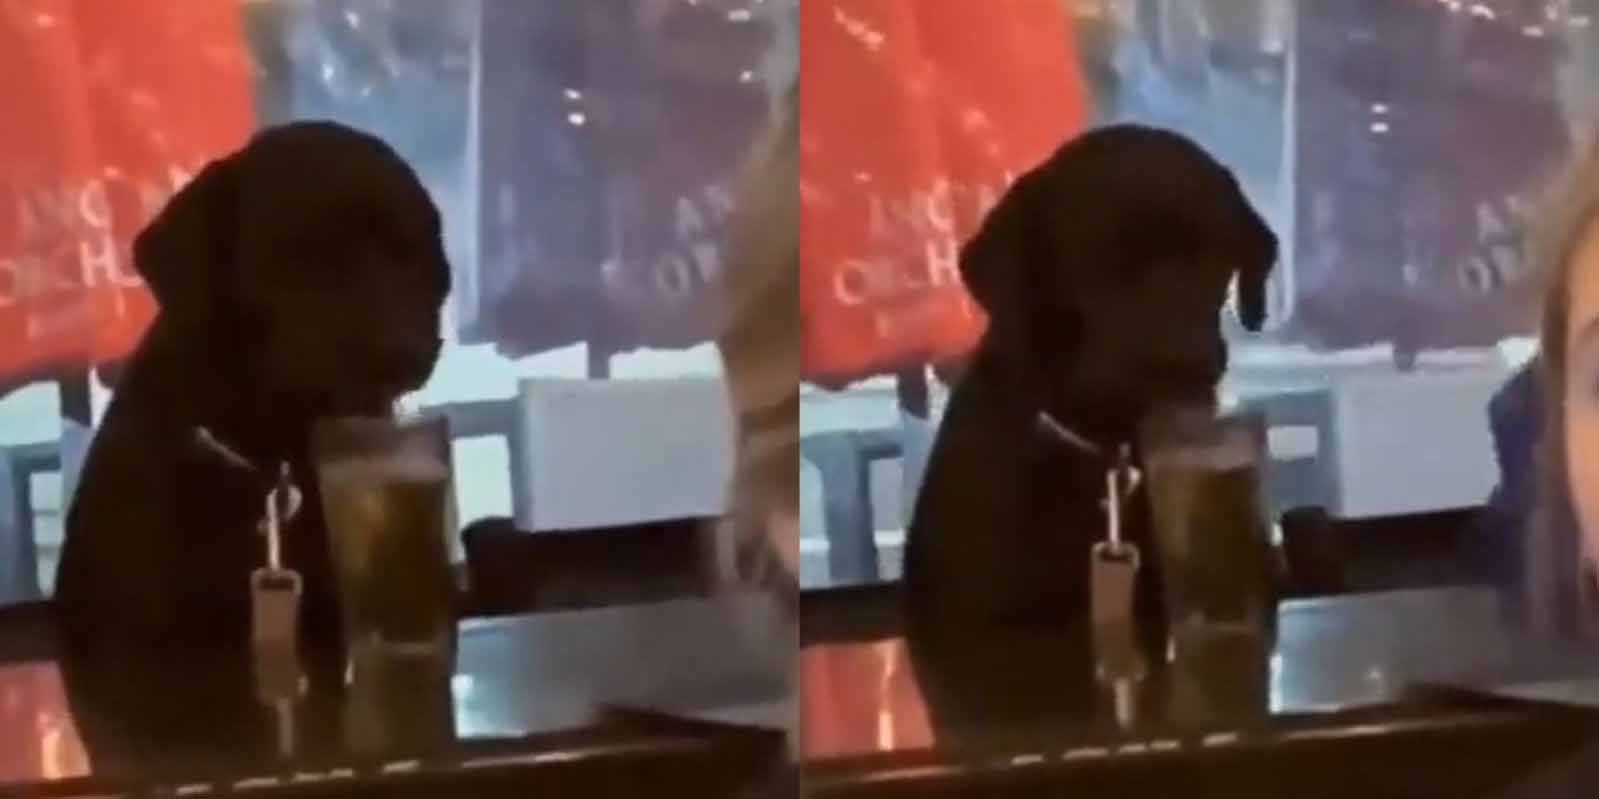 Captan a perrito tomando cerveza en un bar, el vídeo se vuelve viral | El Imparcial de Oaxaca